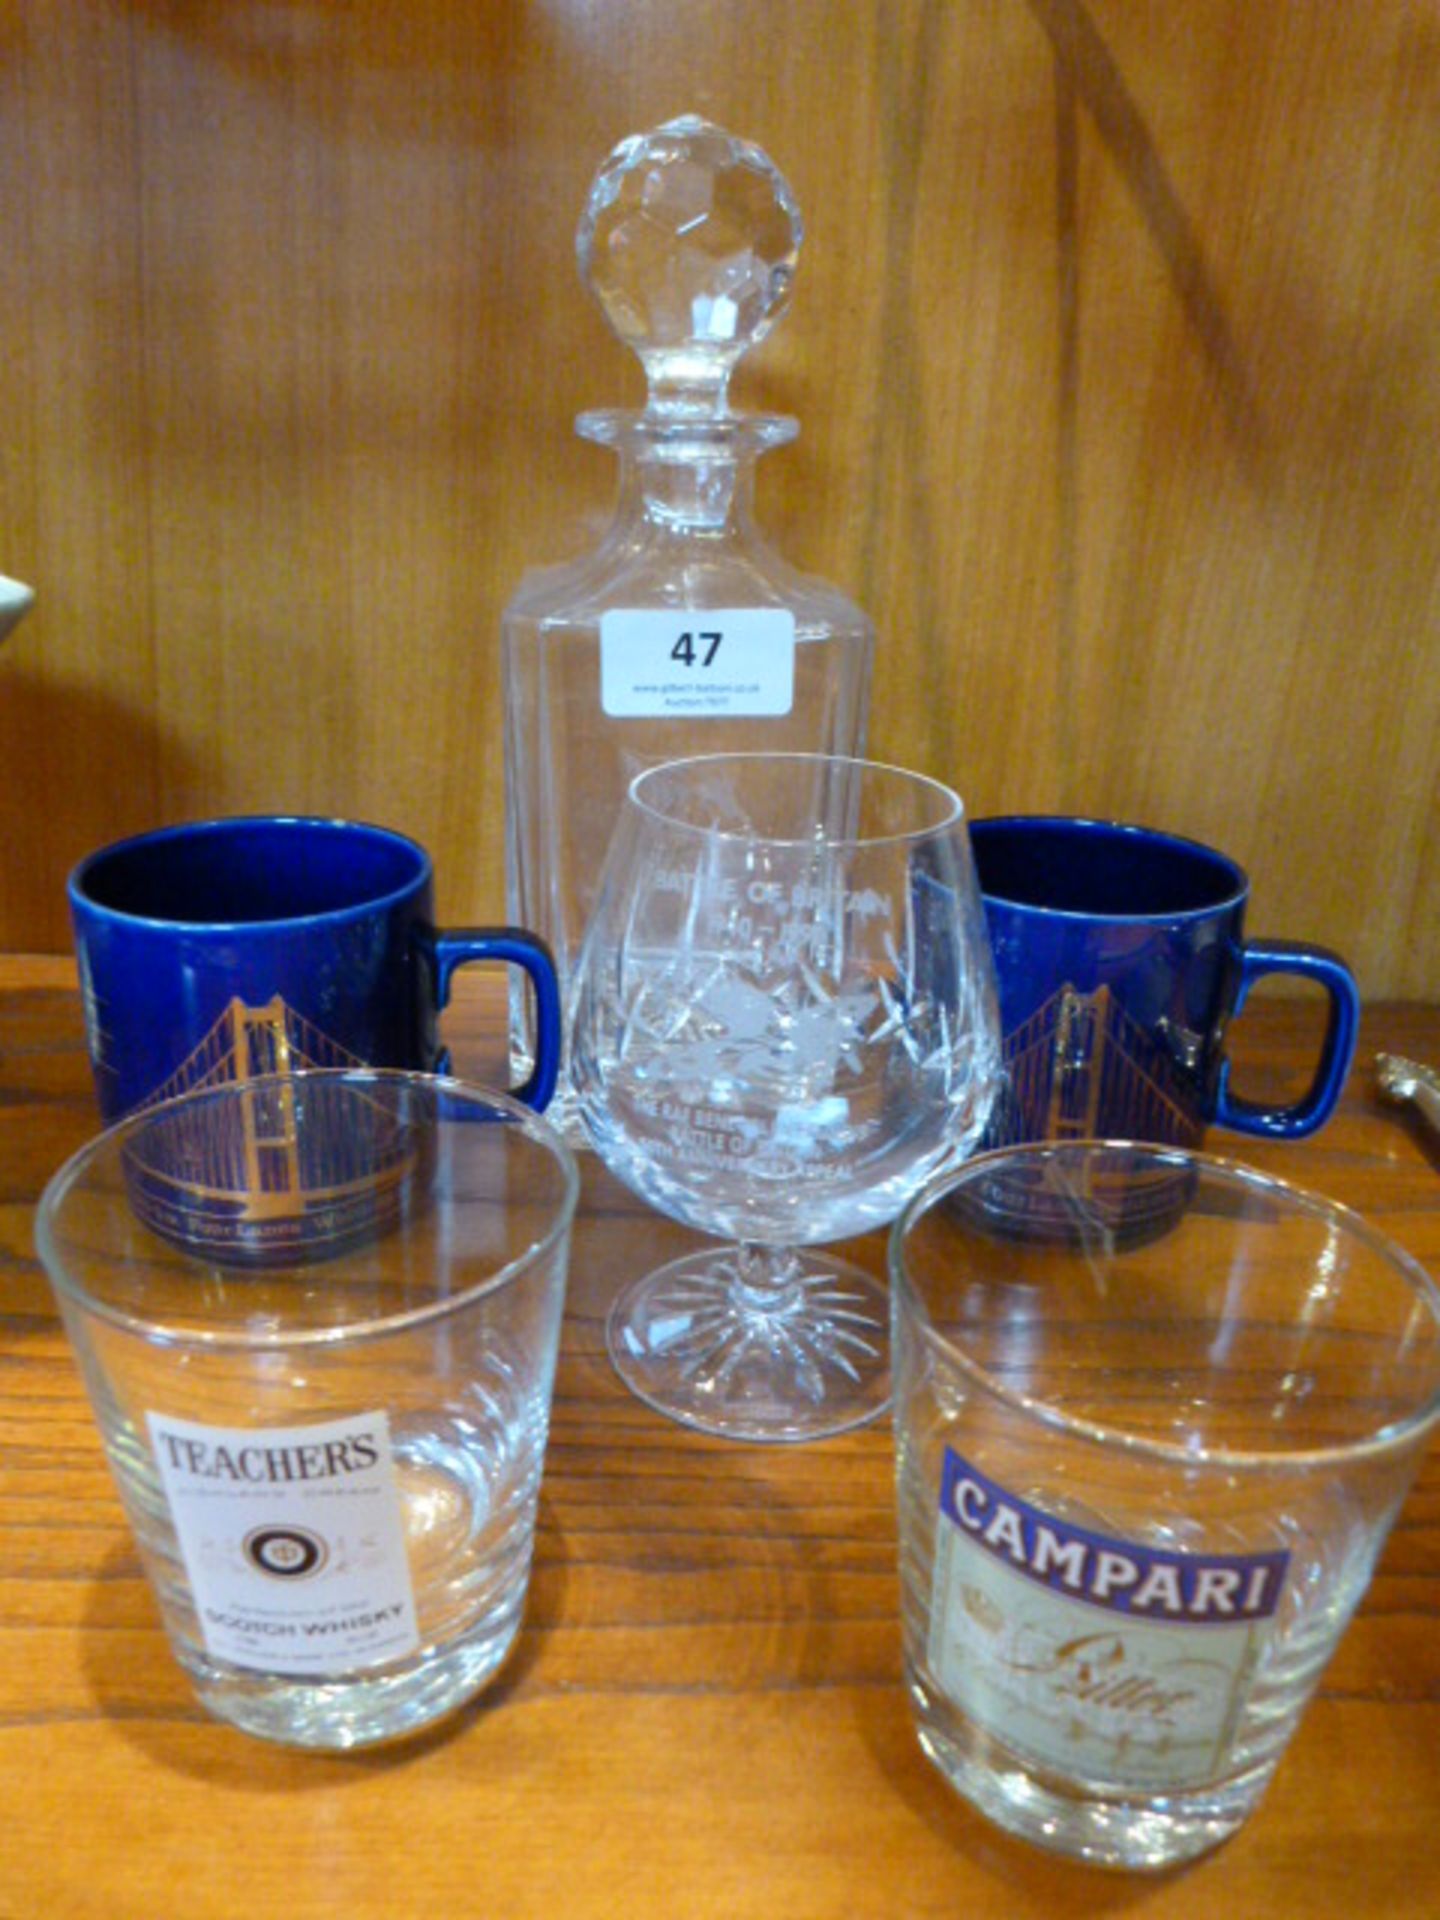 Assorted Glassware, Decanter, Mugs, etc. (Some Hul